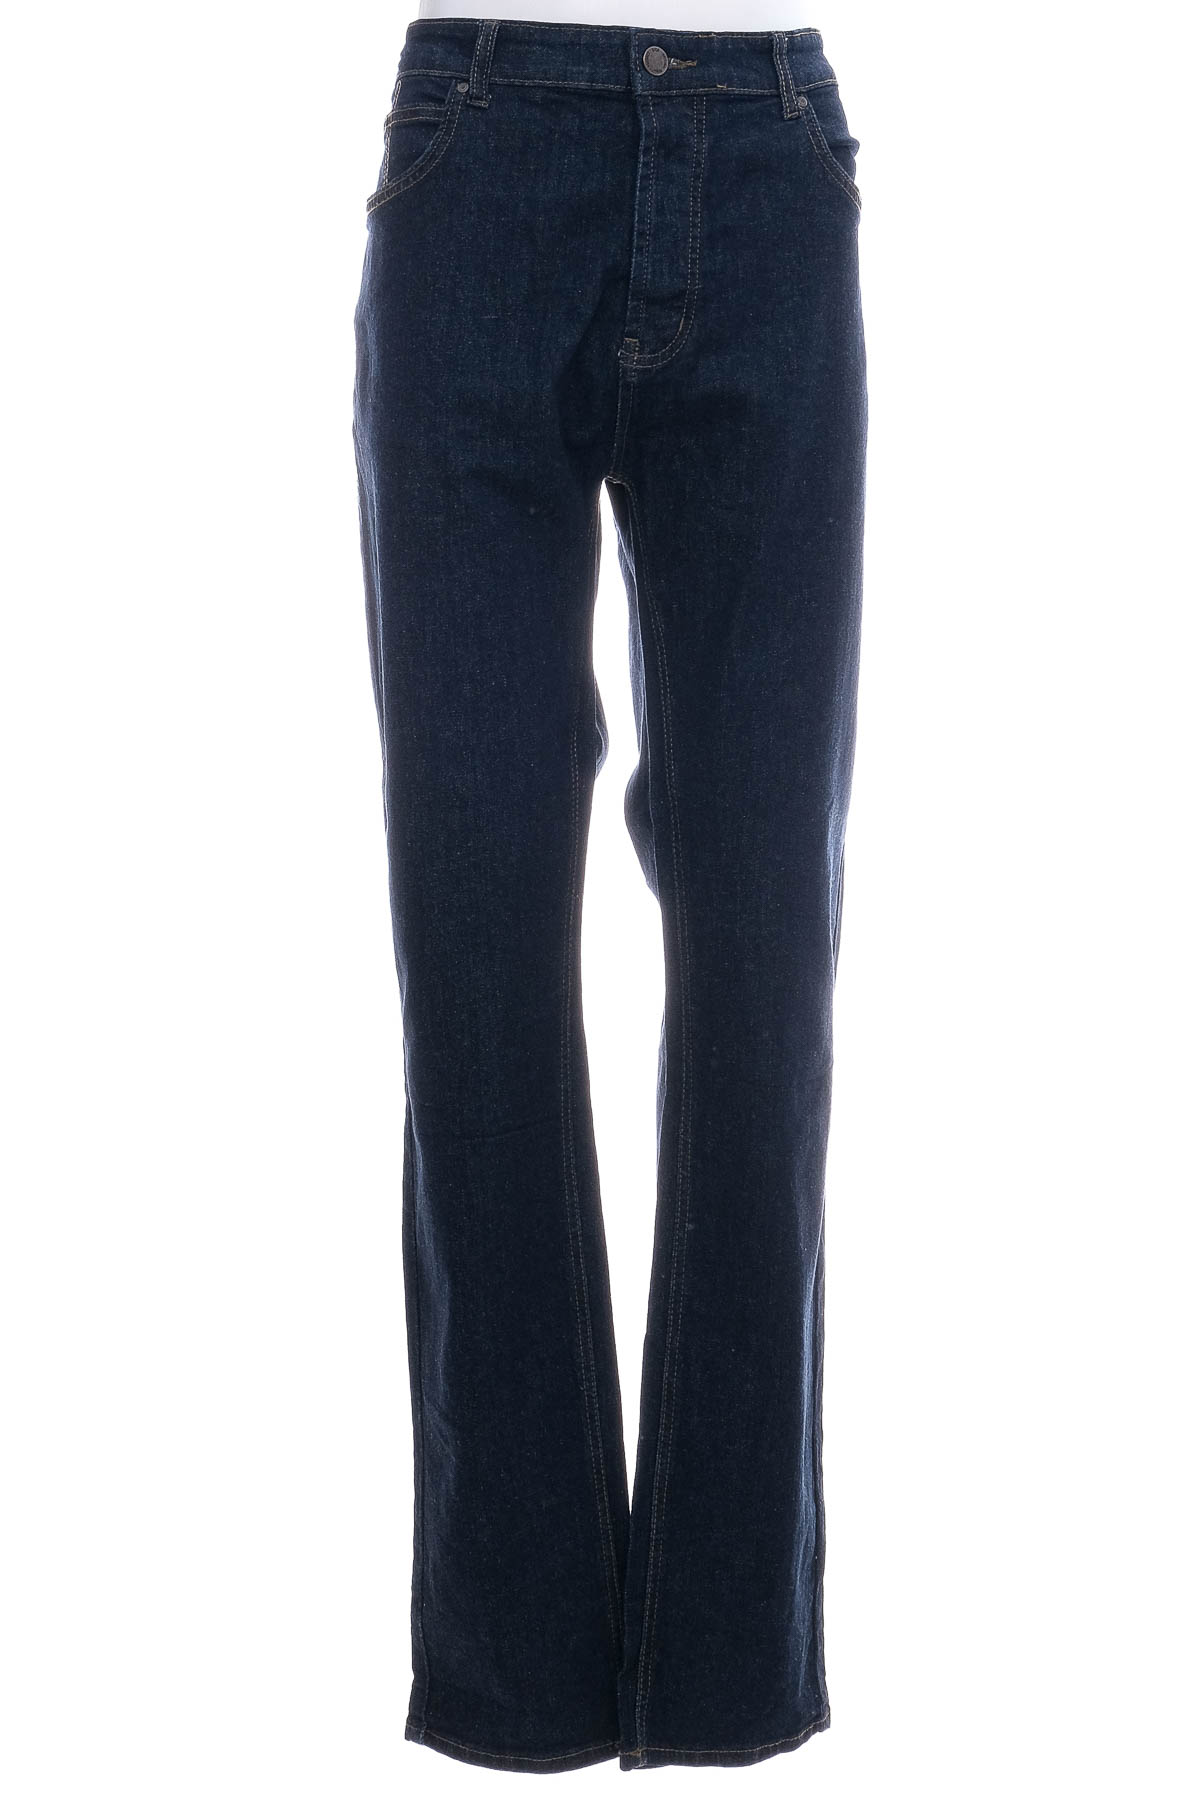 Men's jeans - Denim Co - 0